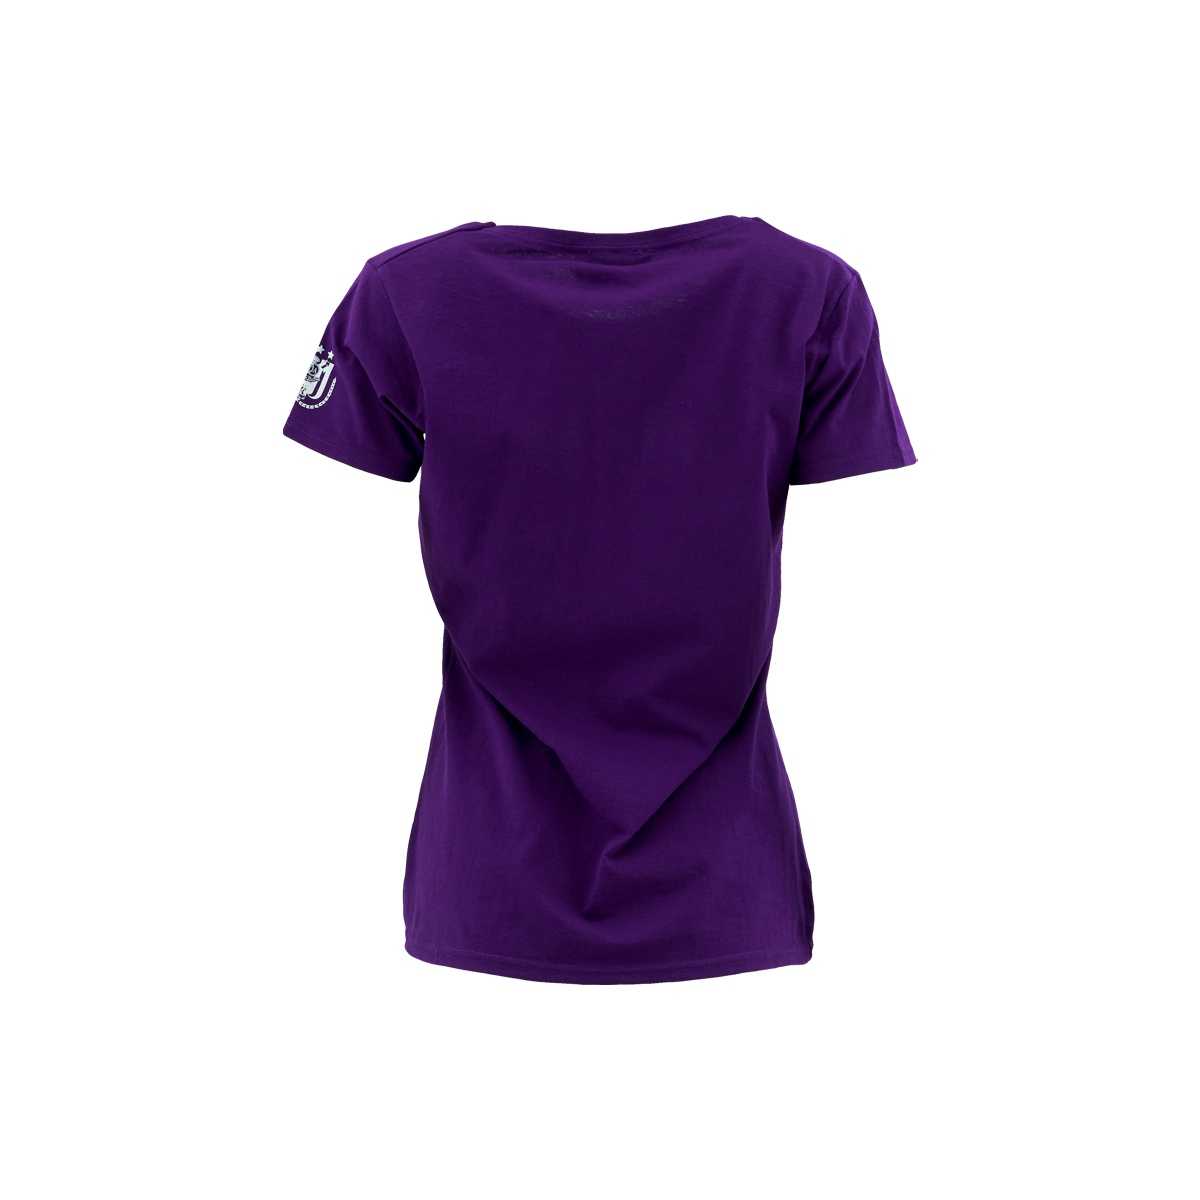 T-Shirt Femmes RSC Anderlecht Diagonale